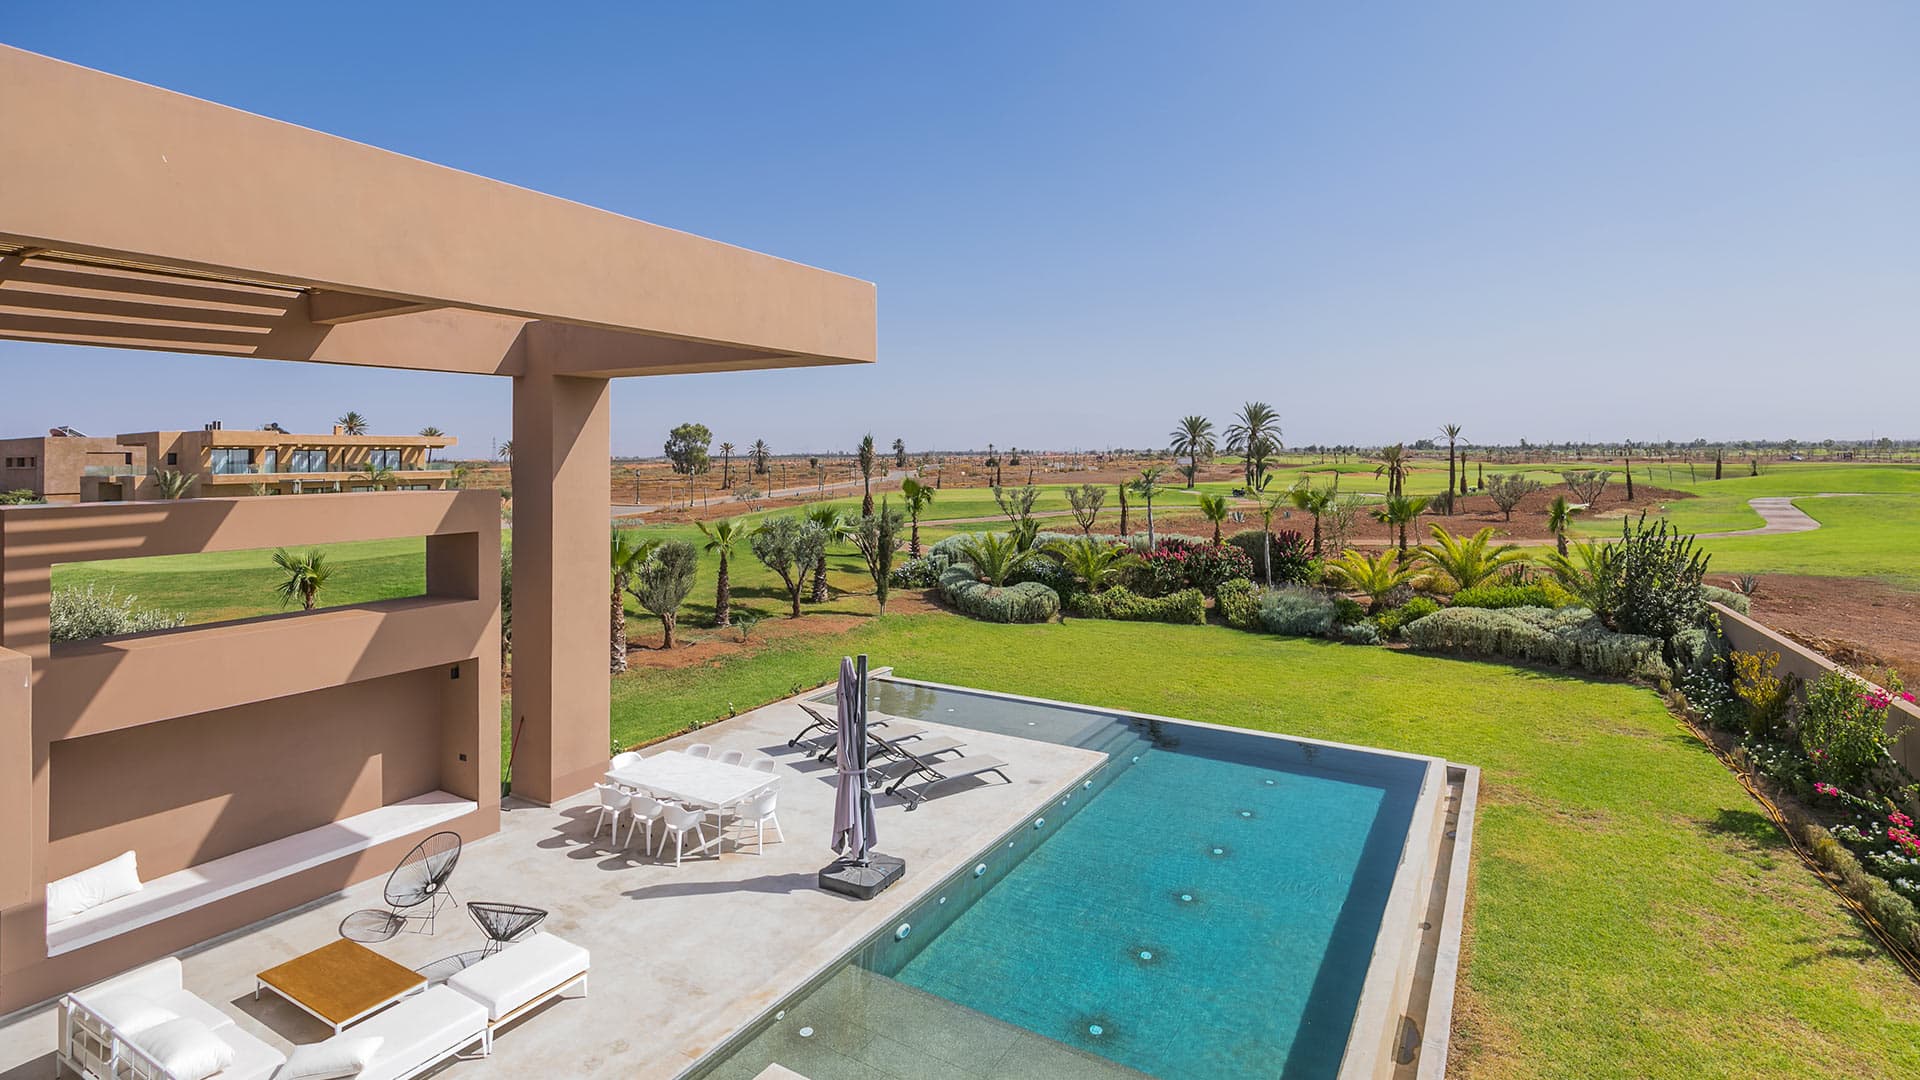 Villa Villa Melka, Location à Marrakech